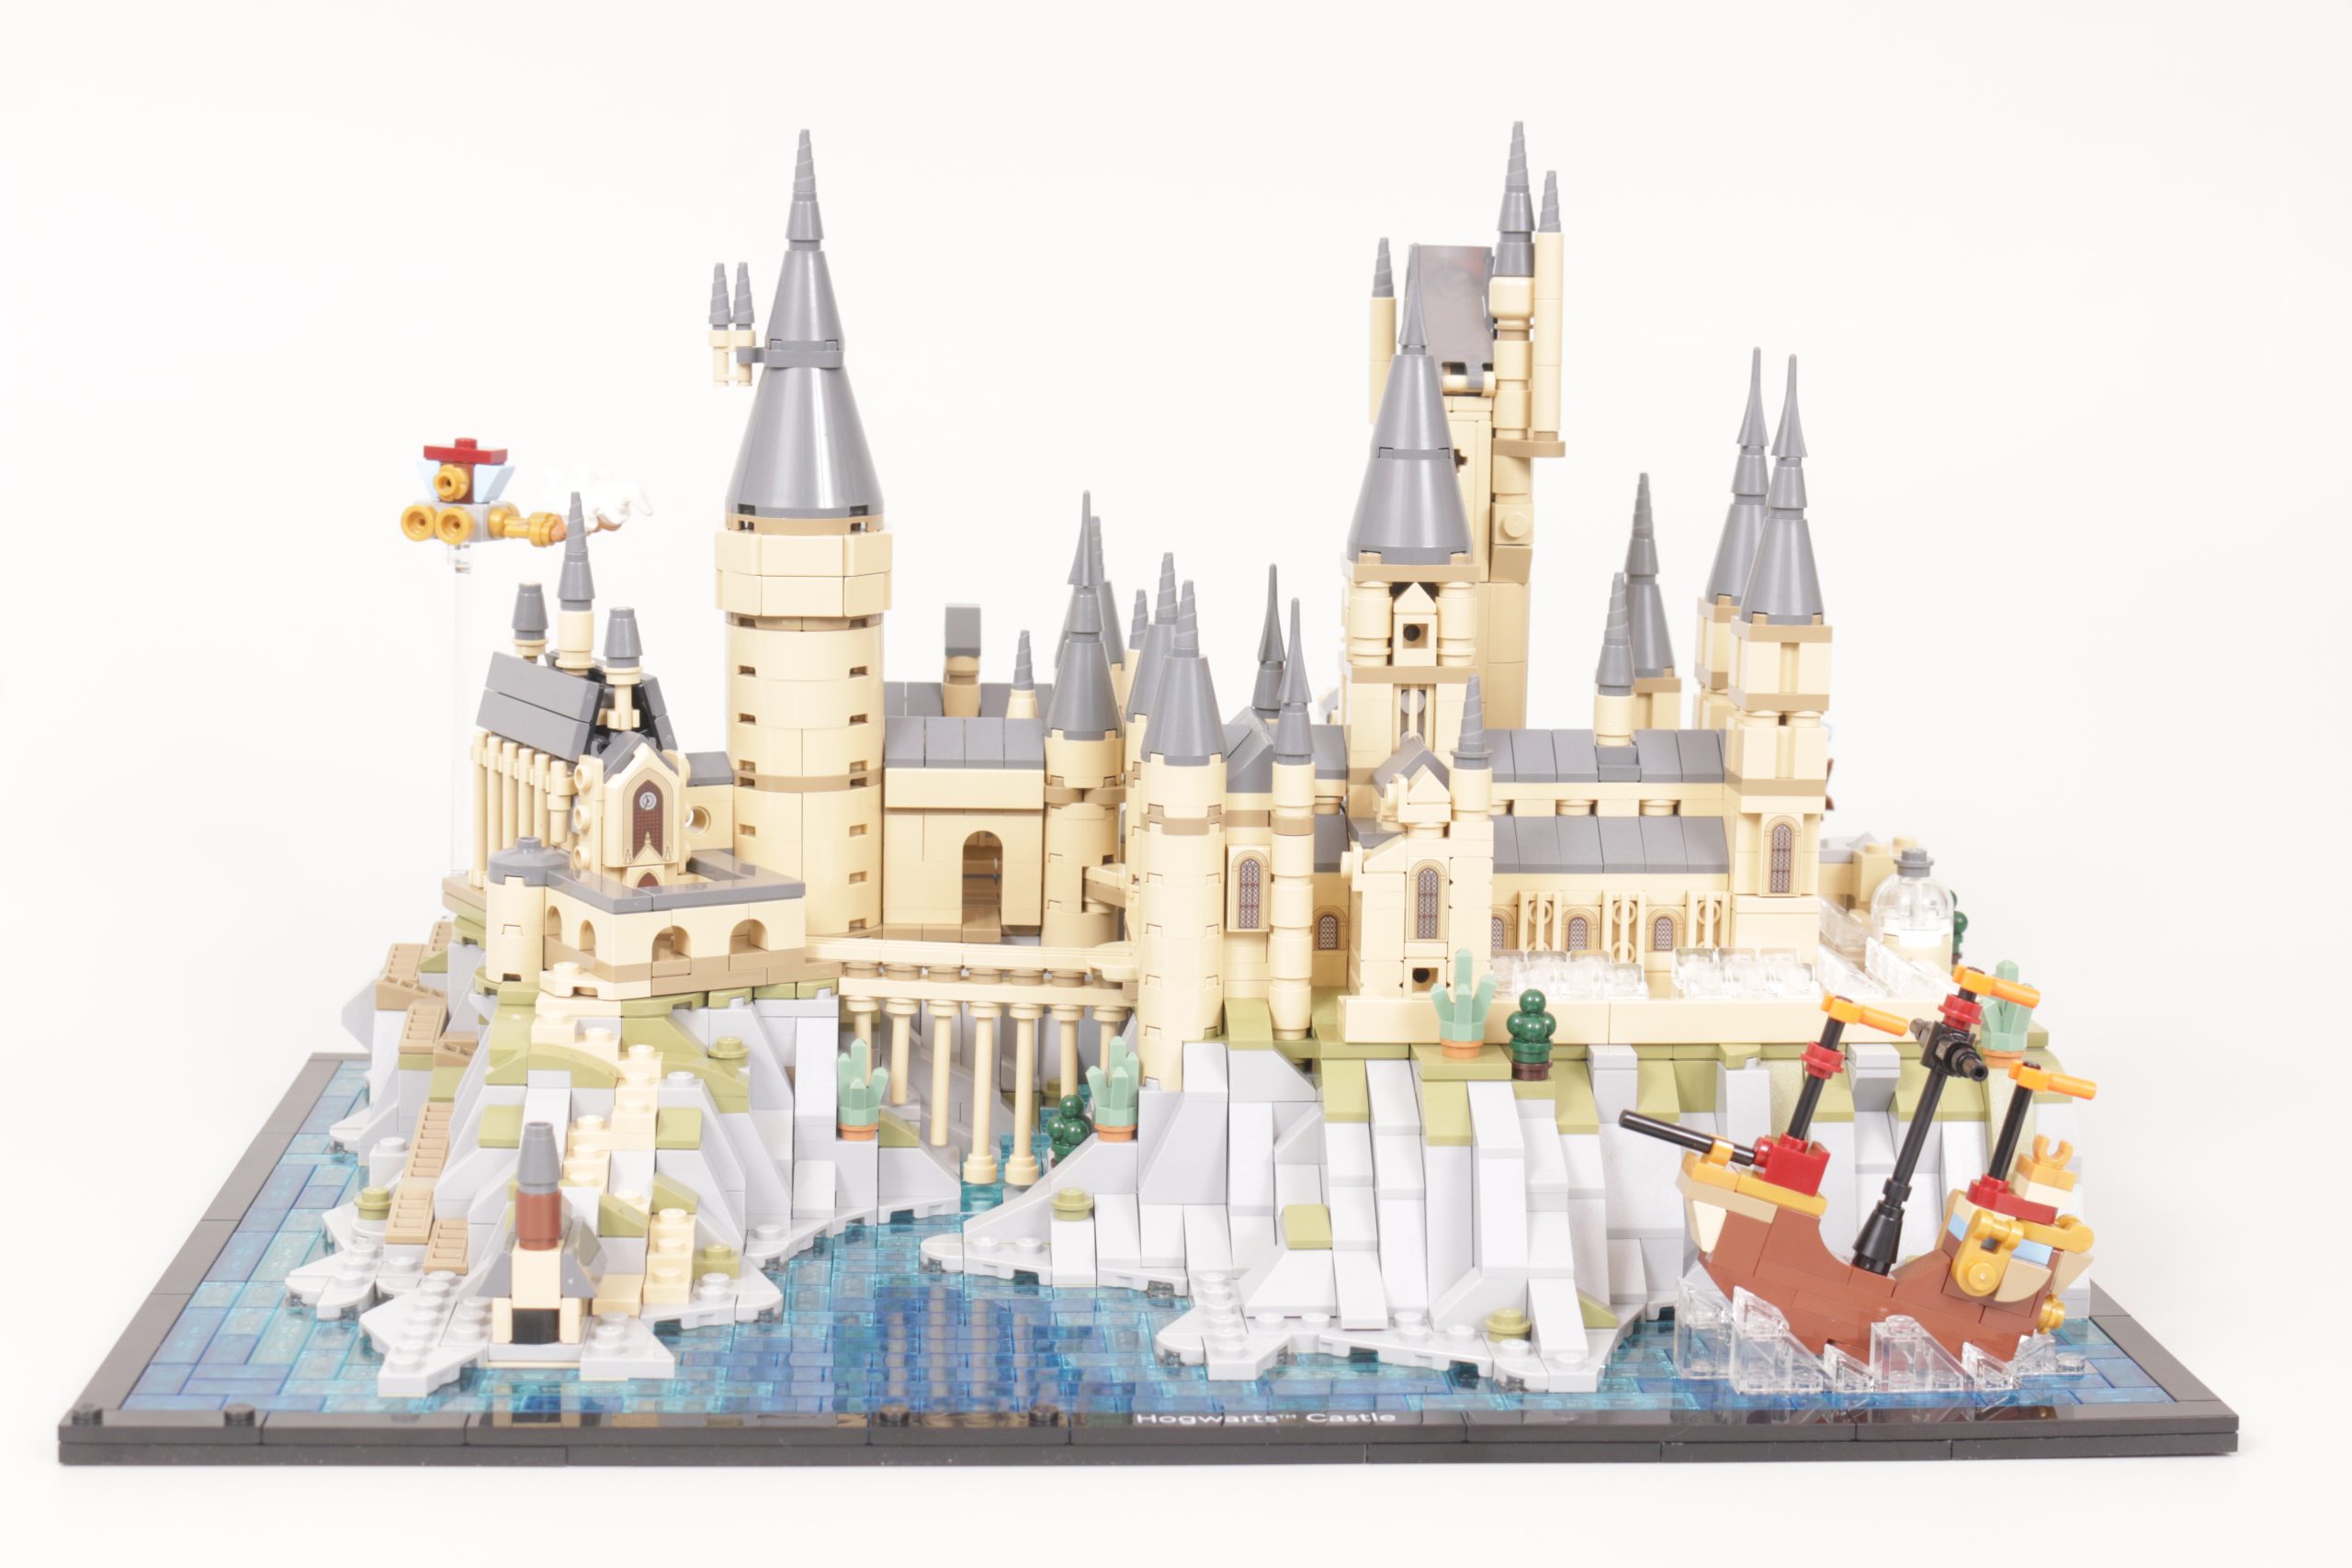 LEGO Hogwarts Castle and Grounds